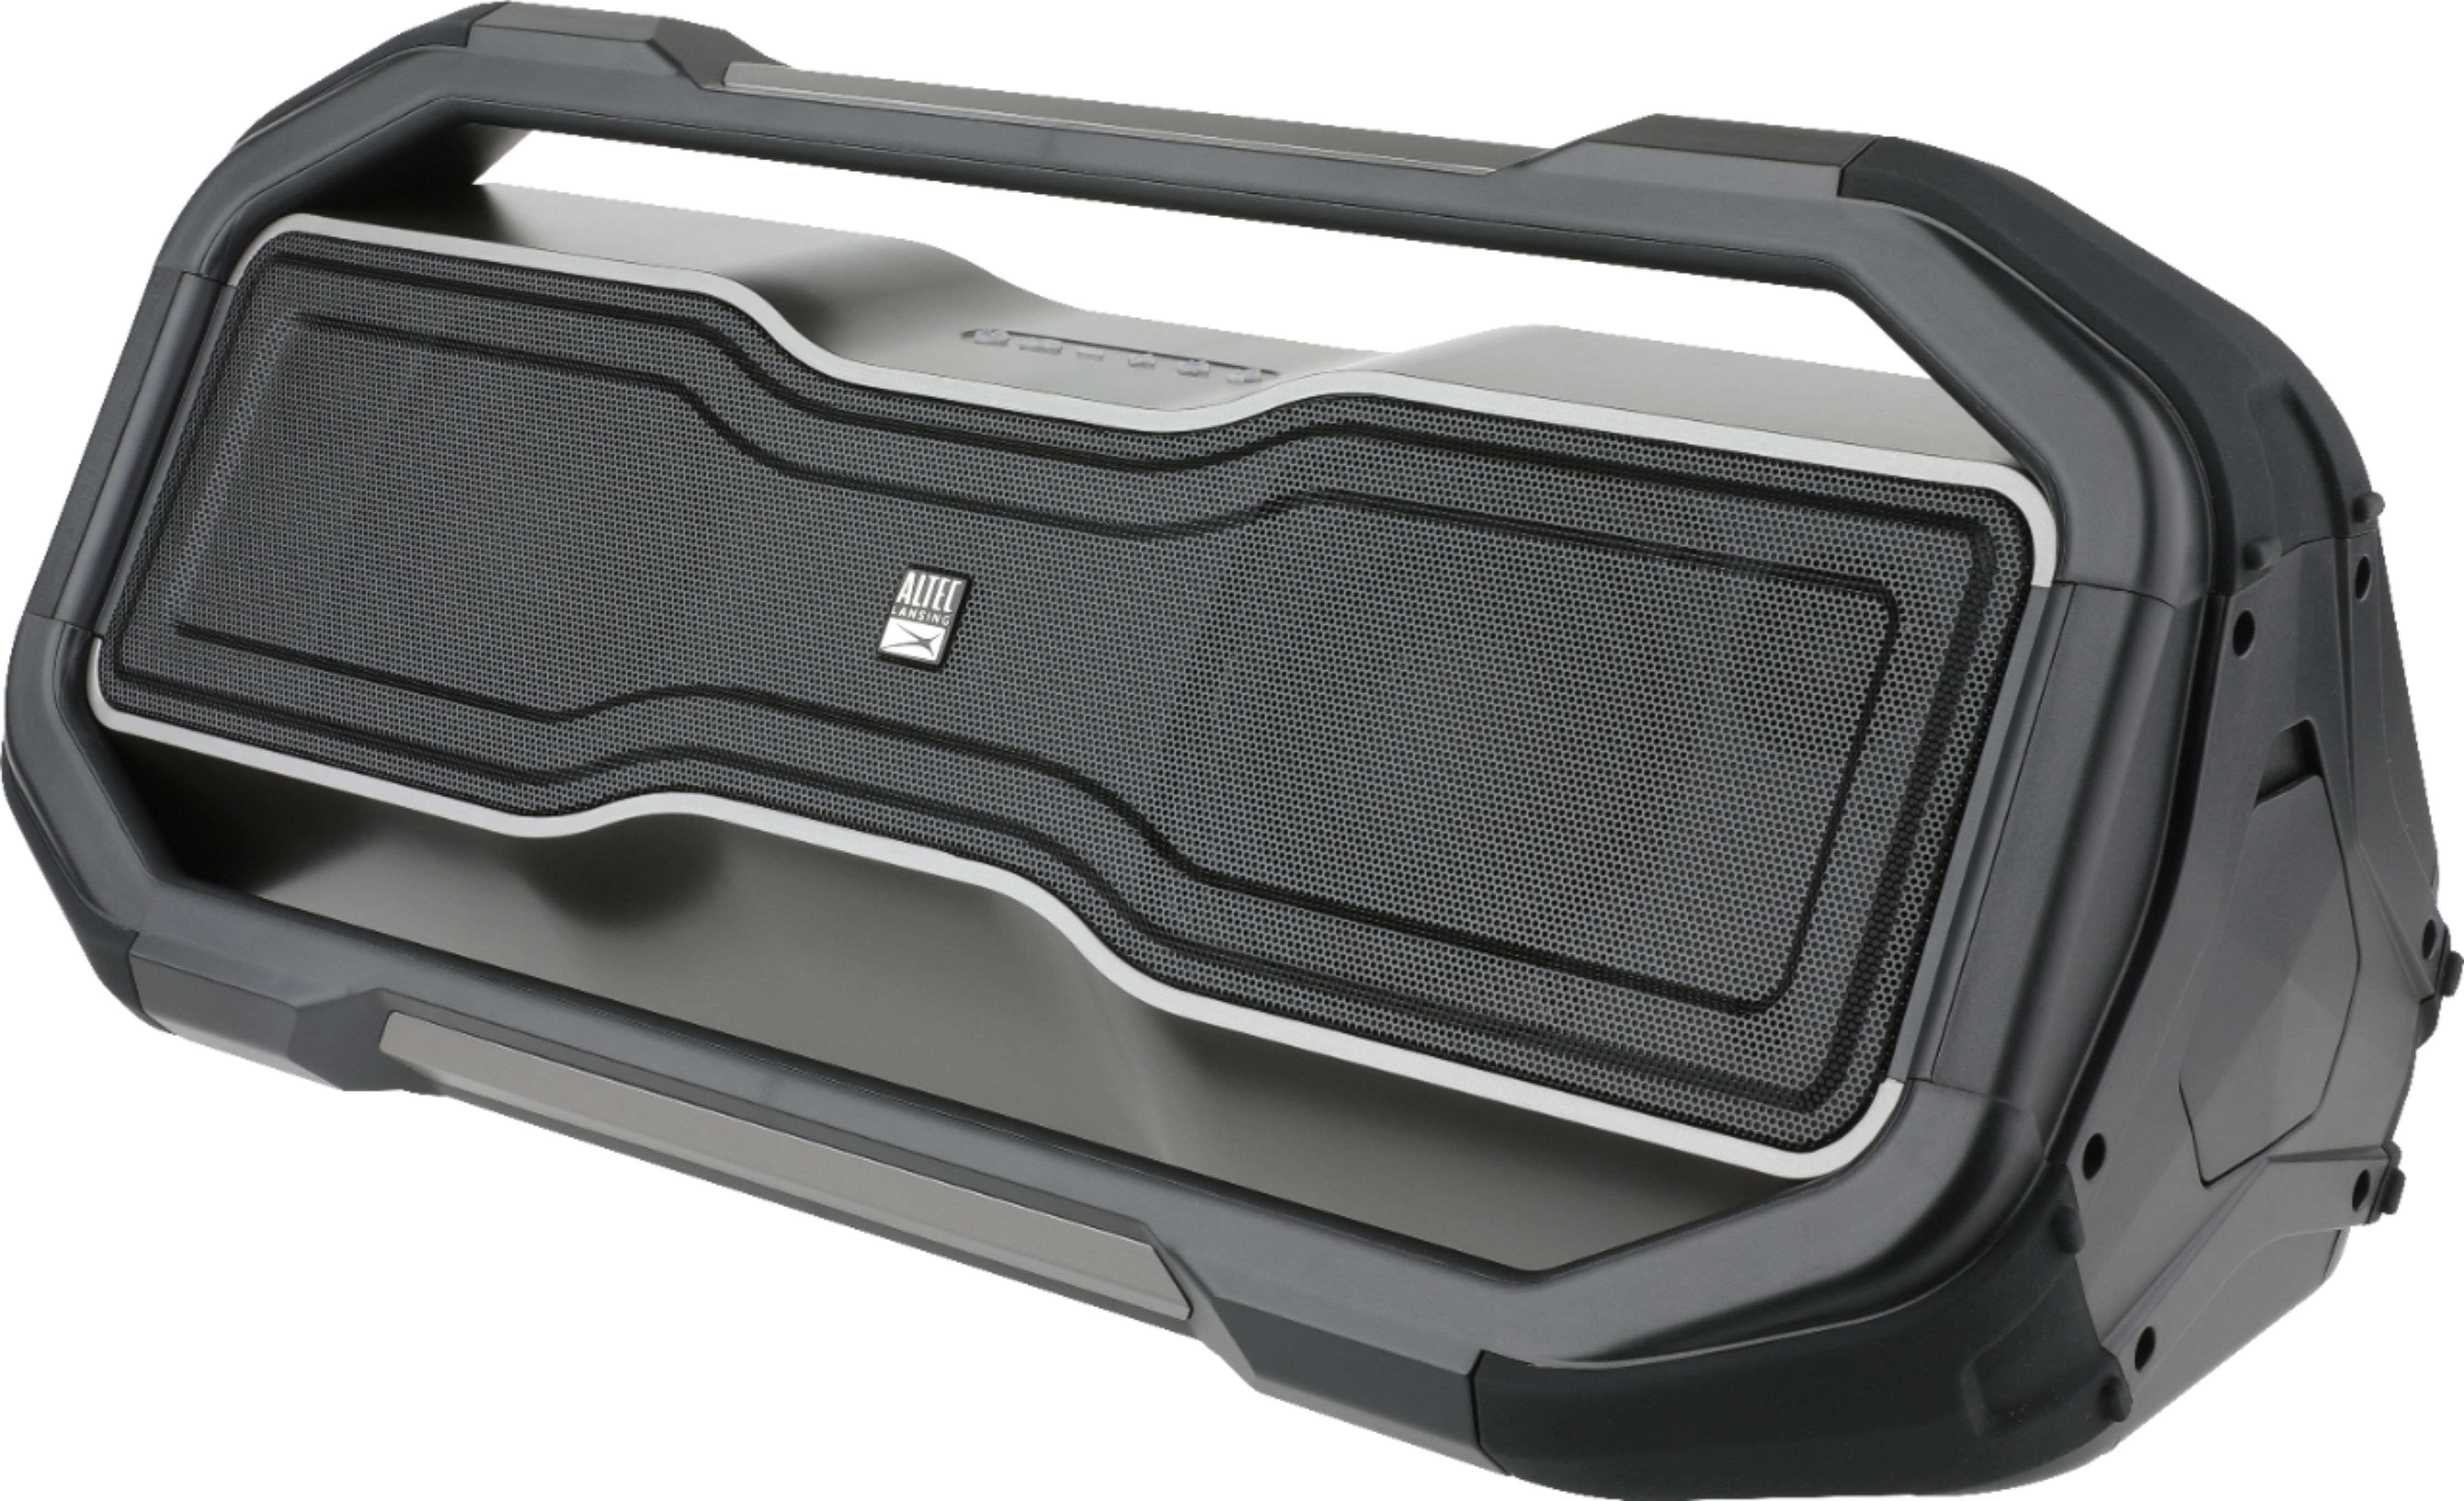 Buy ALTEC LANSING AL-1002A-B Super Bass Wireless Portable